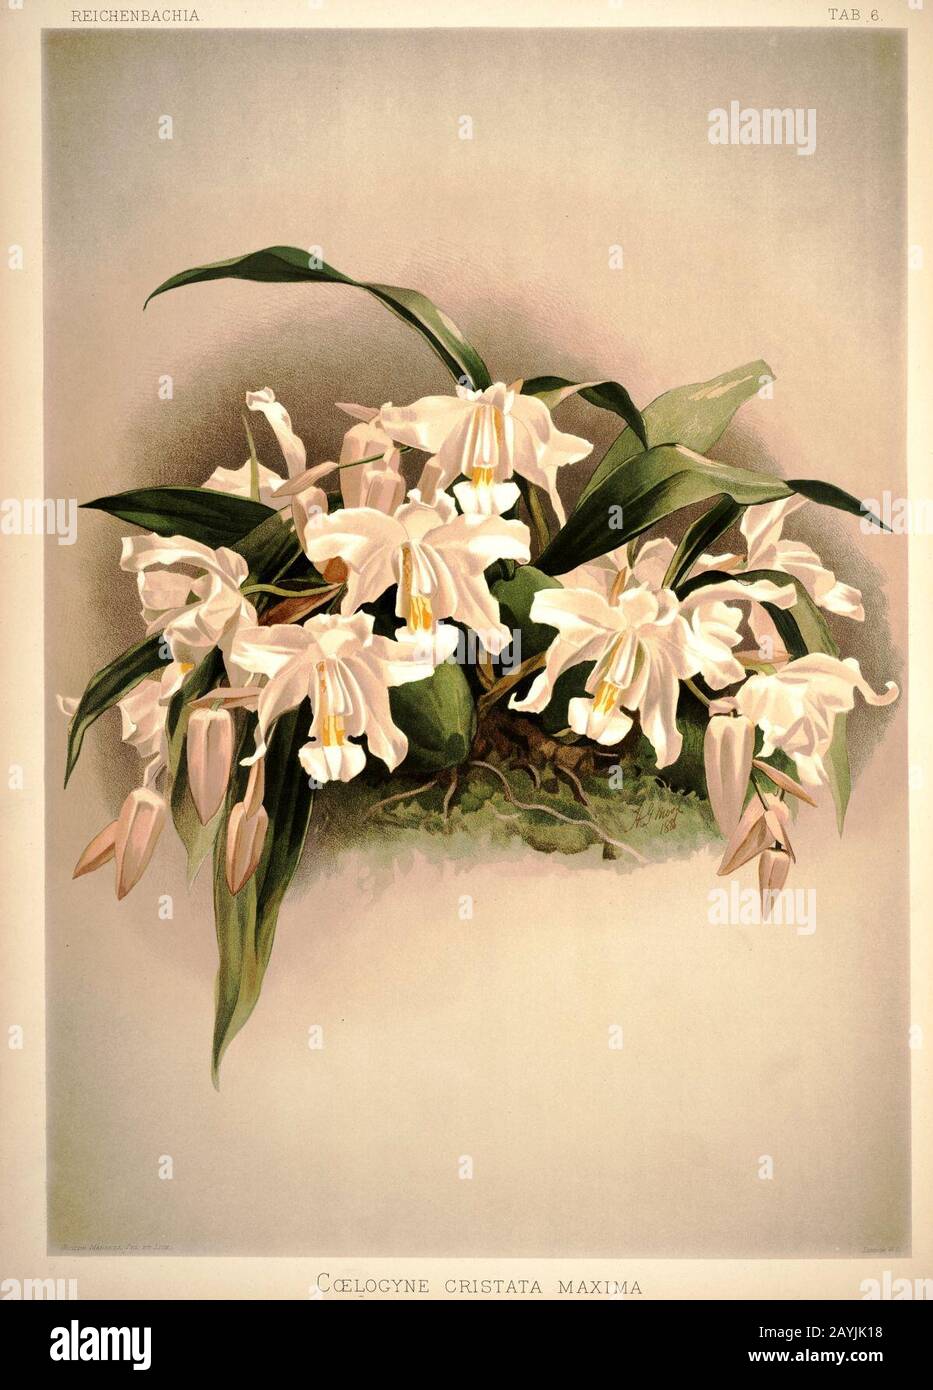 Frederick Sander - Reichenbachia I plate 06 (1888) - Coelogyne cristata maxima. Stock Photo